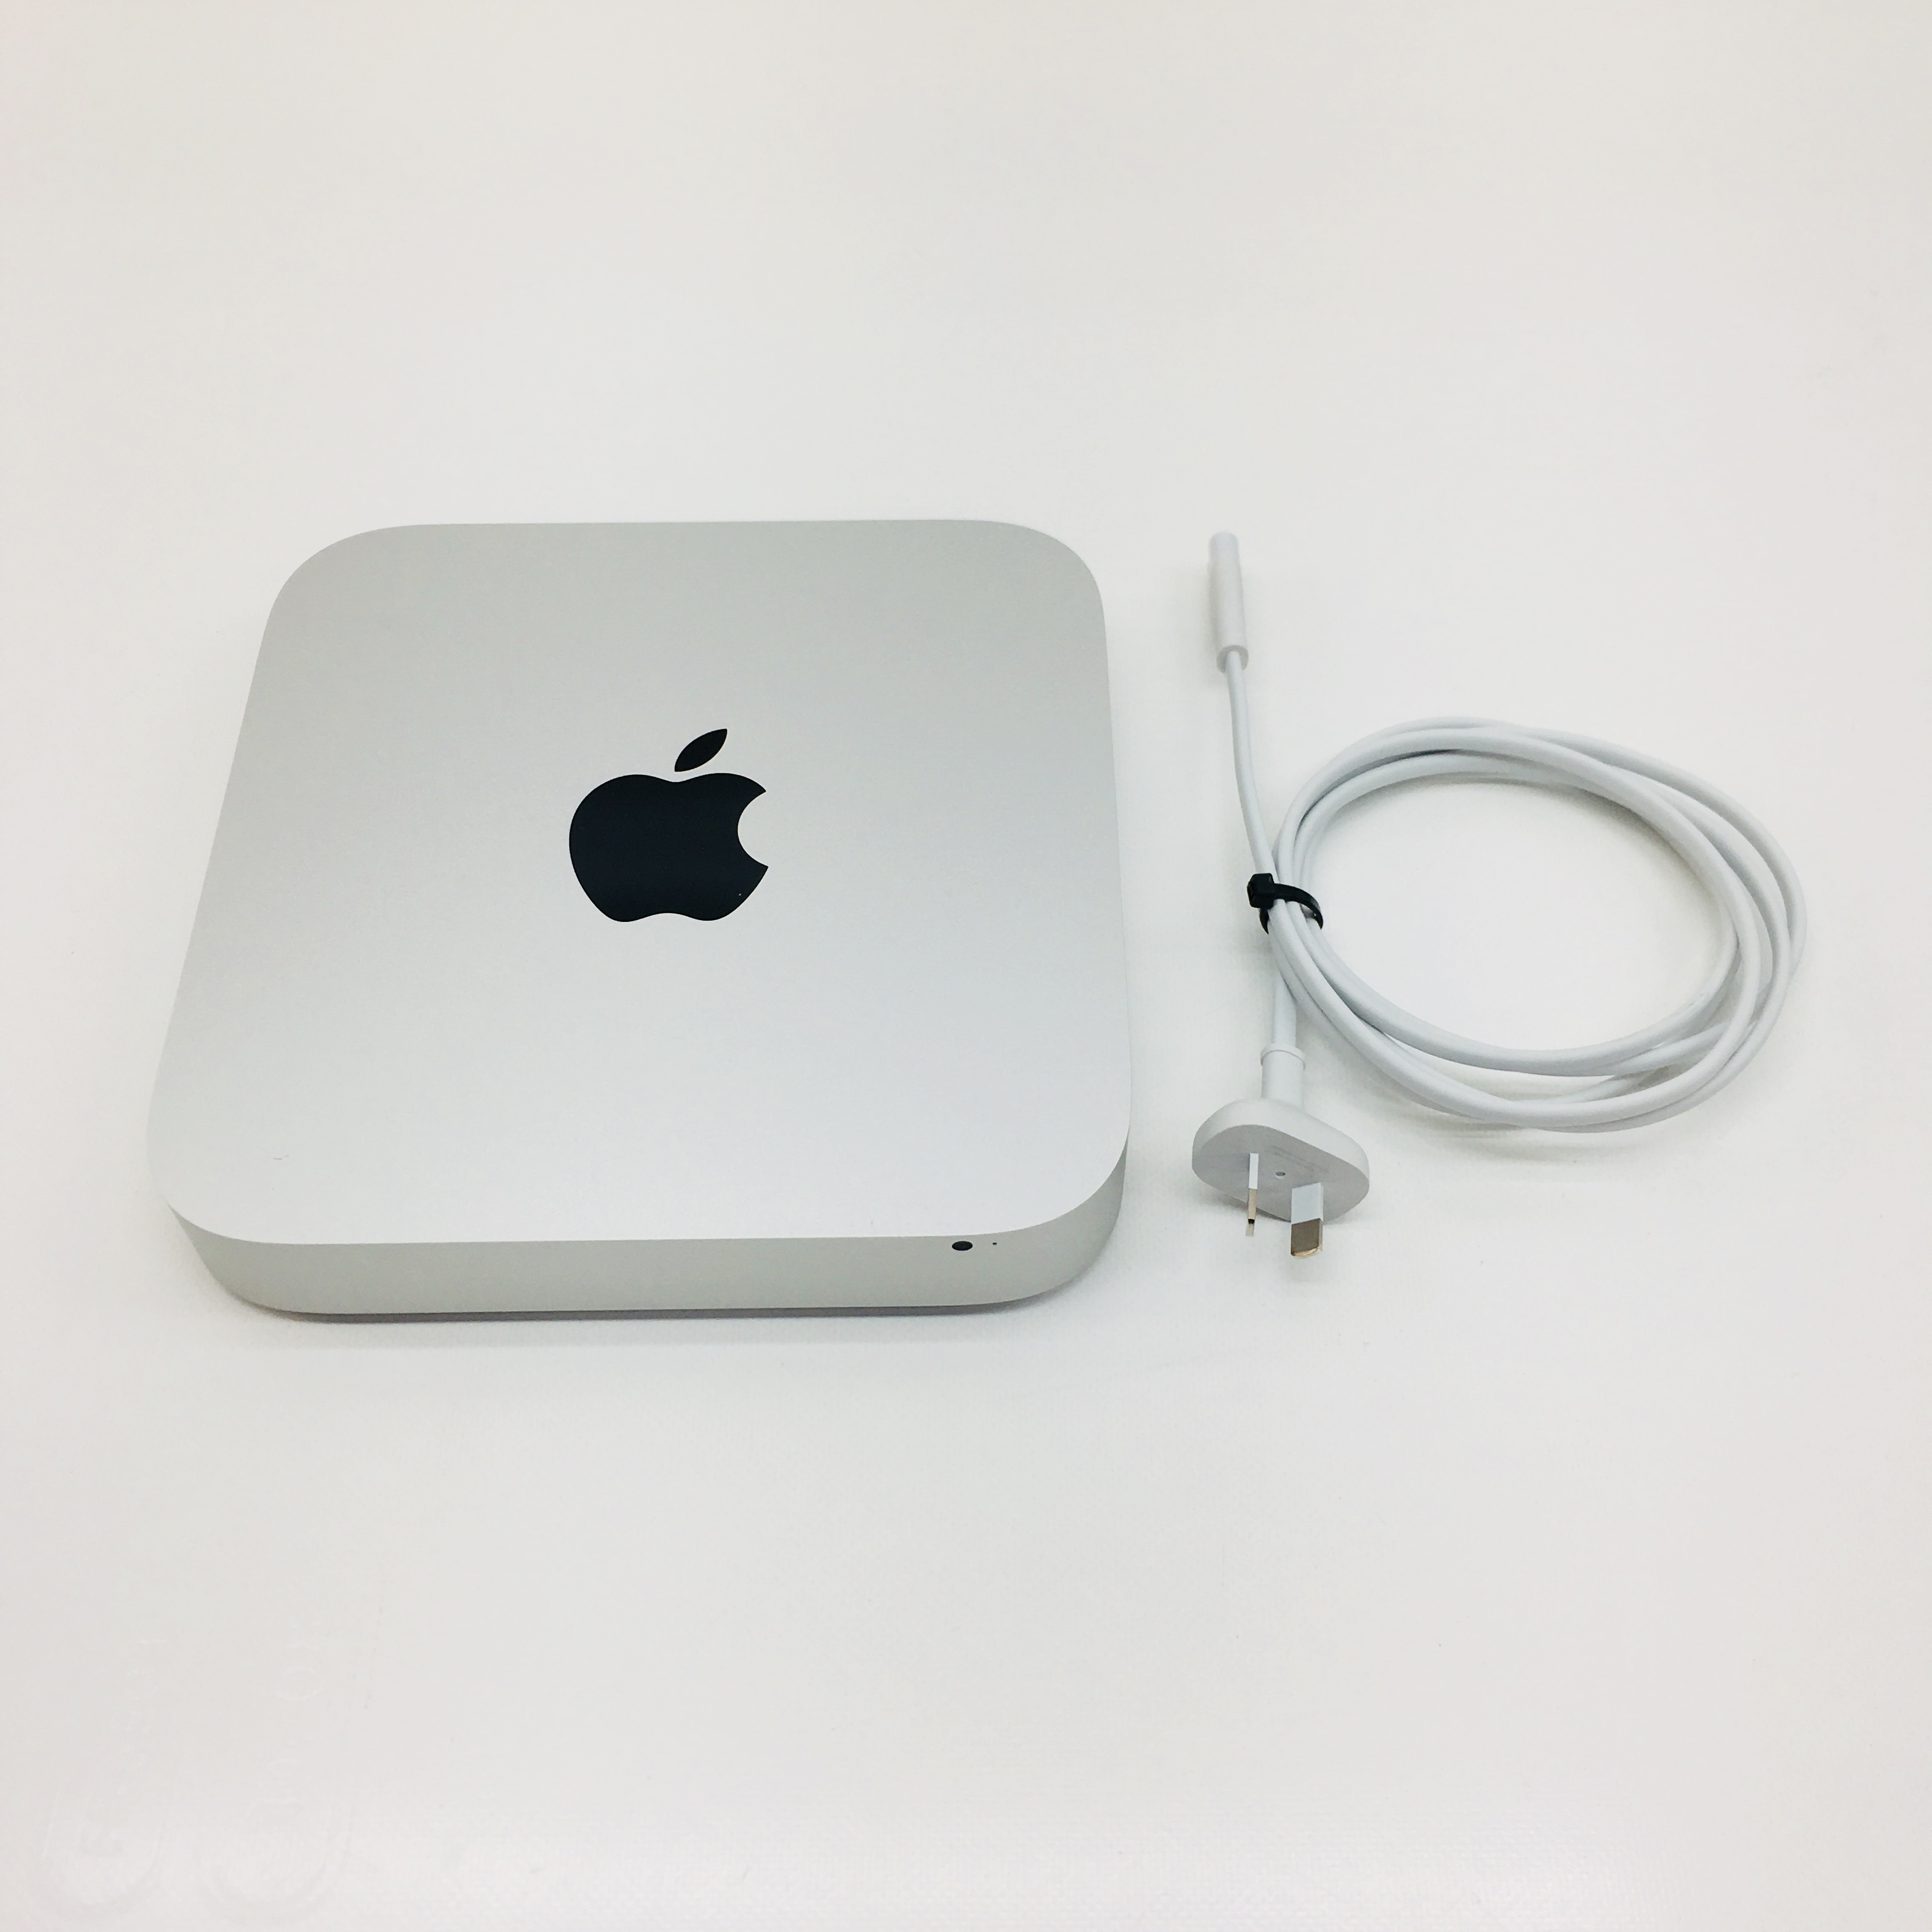 mac mini 2012 i7 for sale